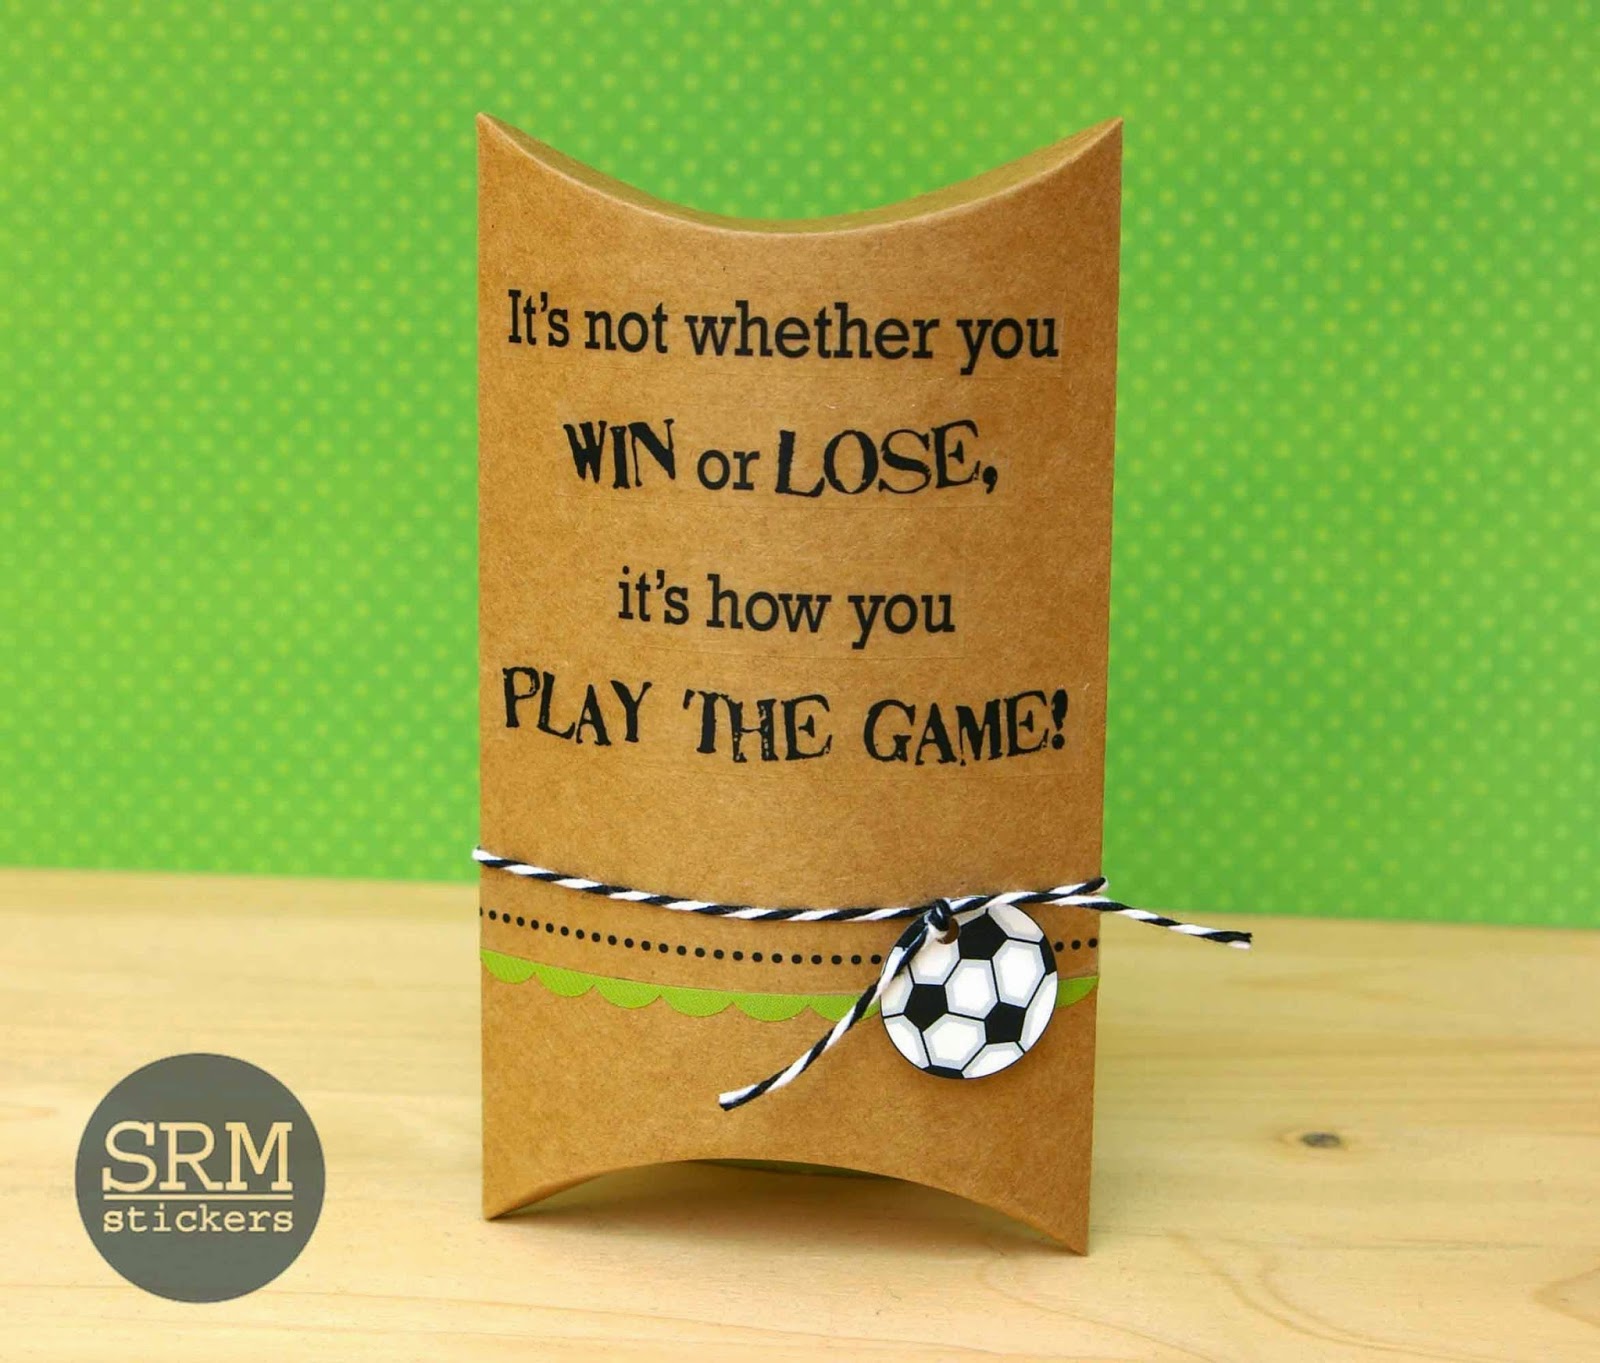 SRM Stickers - Soccer Team Treats by Lorena - #soccer #pillowbox #kraft #srmstickers #sticker #twine